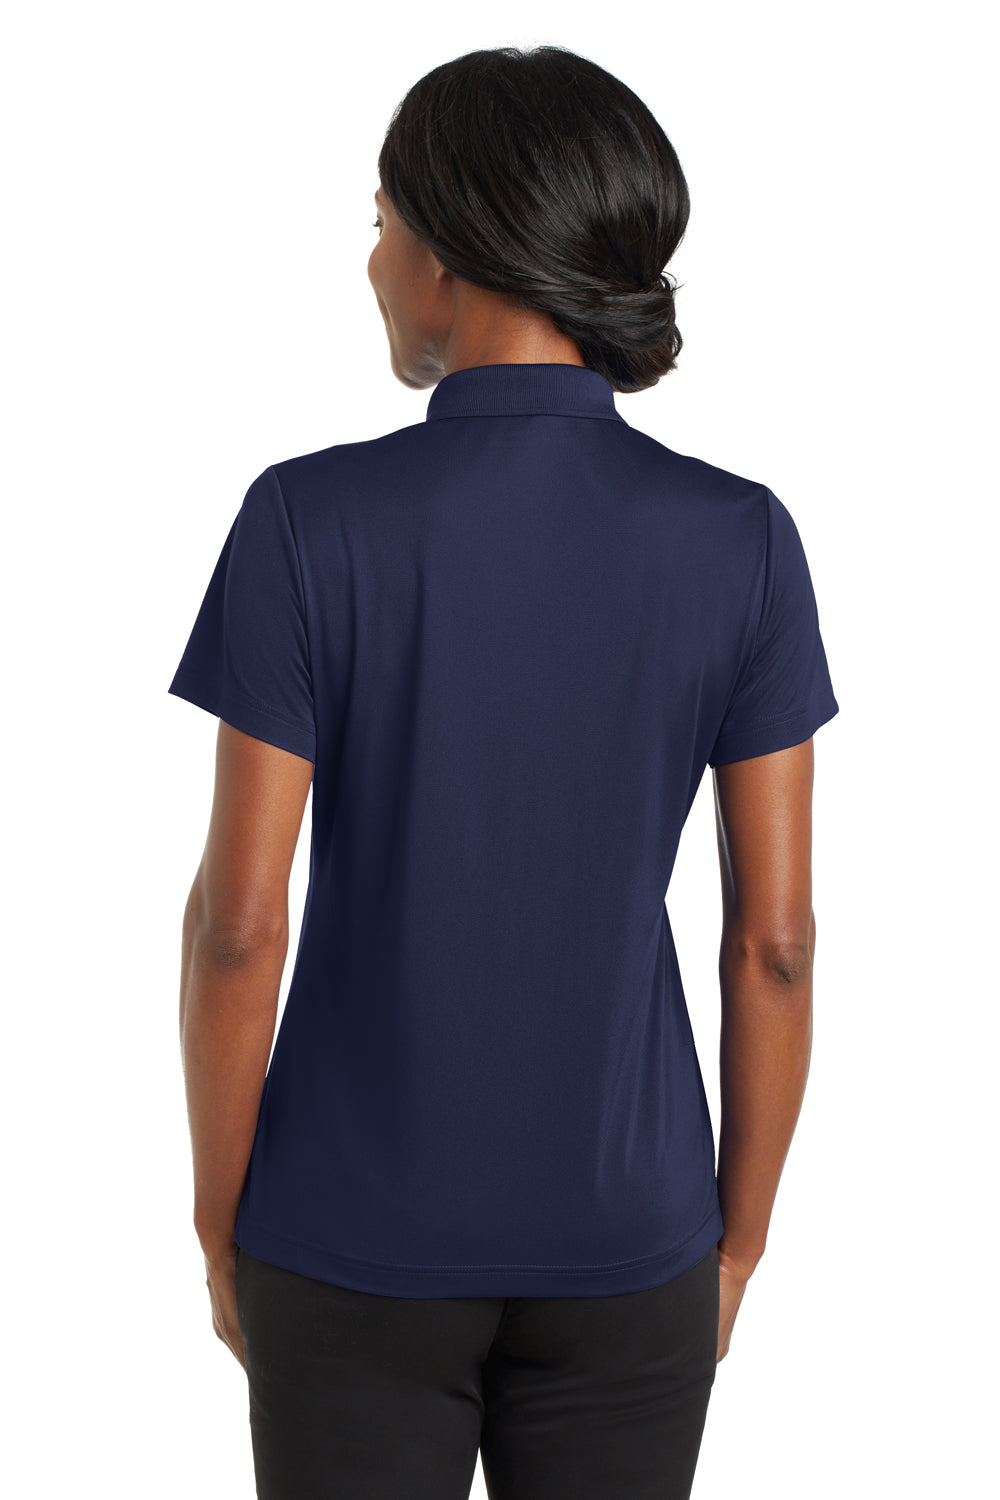 CornerStone CS422 Womens Gripper Moisture Wicking Short Sleeve Polo Shirt Navy Blue Back